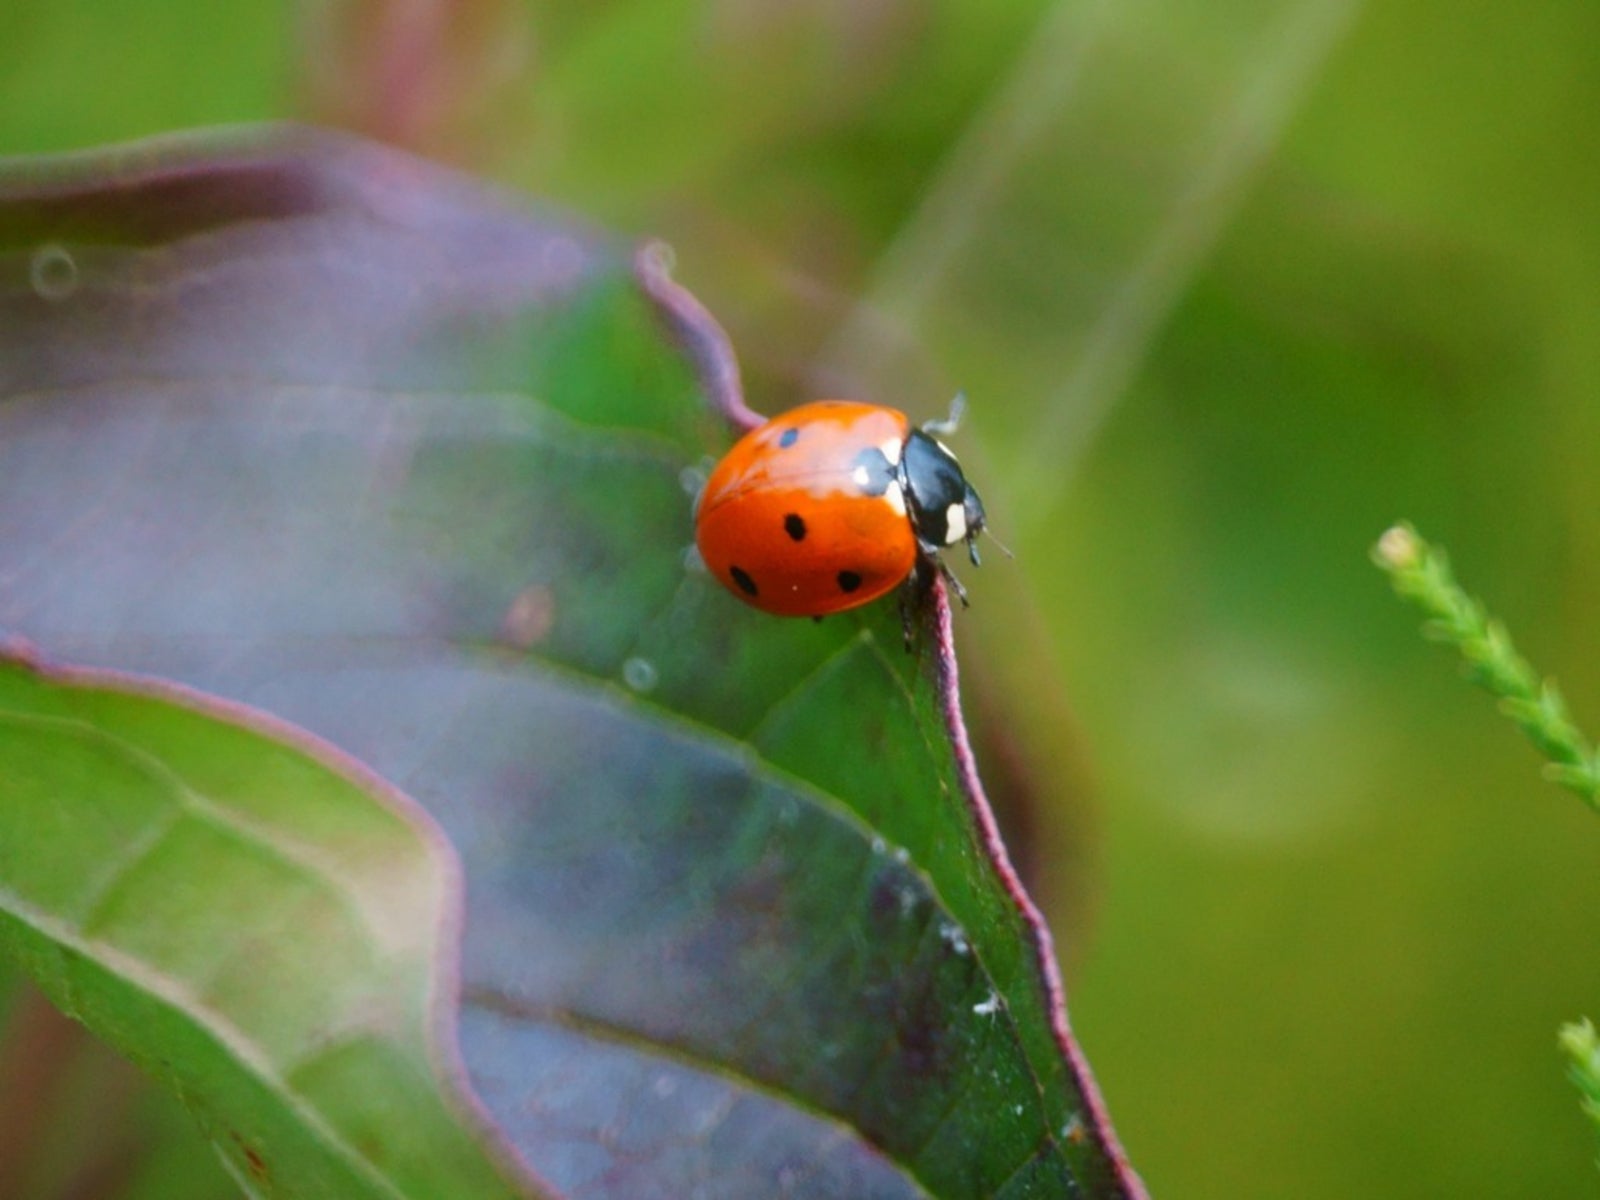 Attracting Ladybugs: Encouraging Ladybugs In The Garden